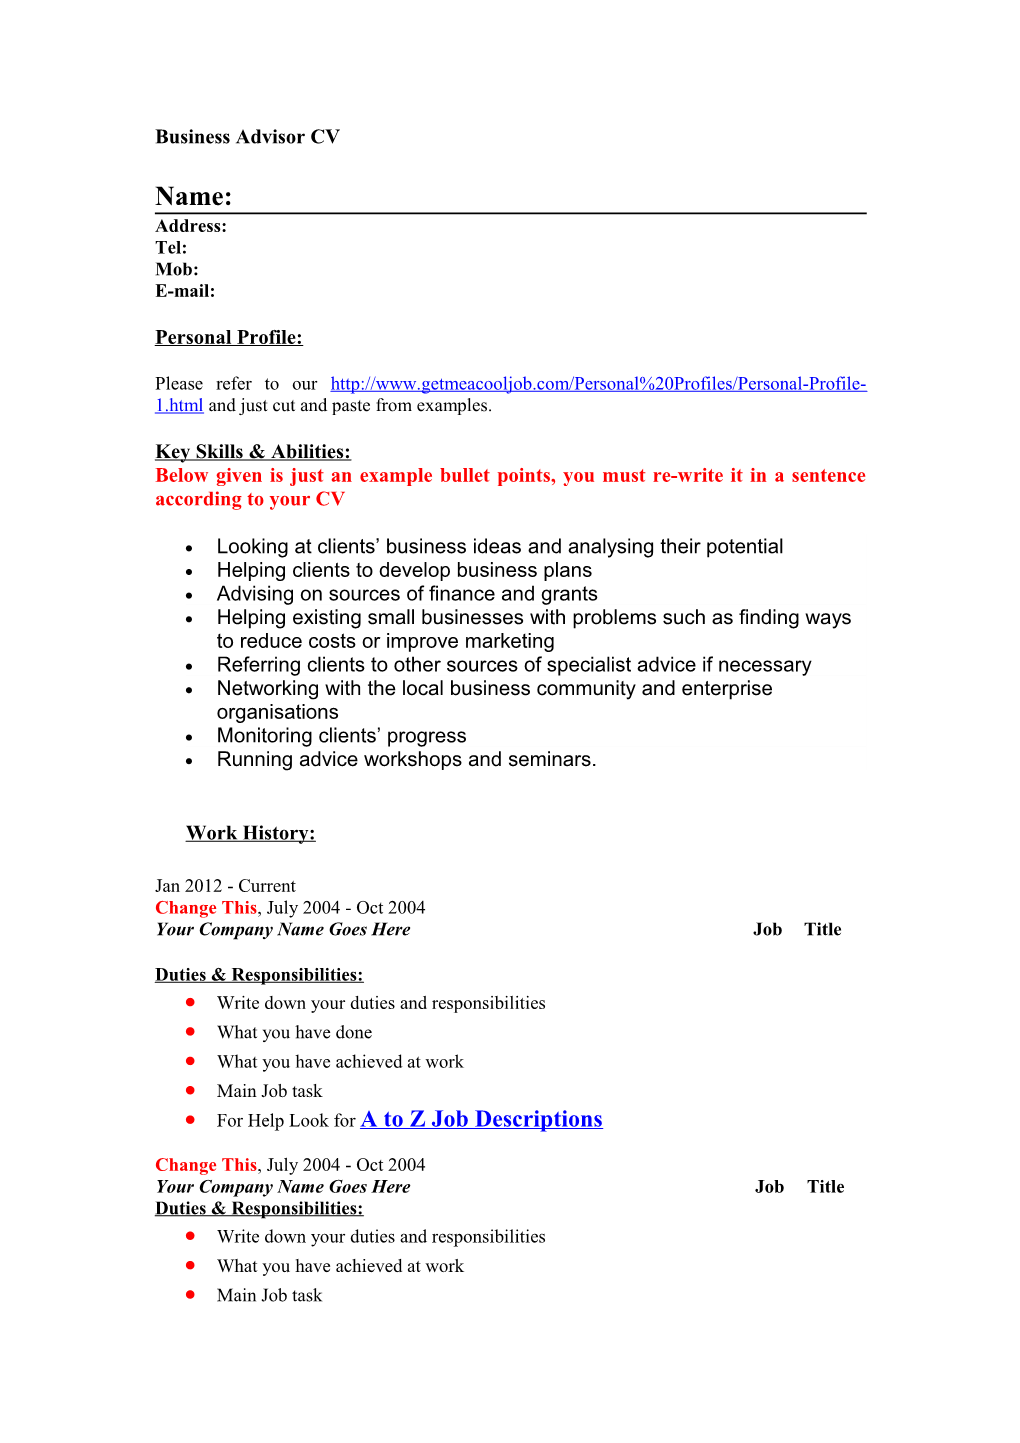 Business Adviser Job Descriptions